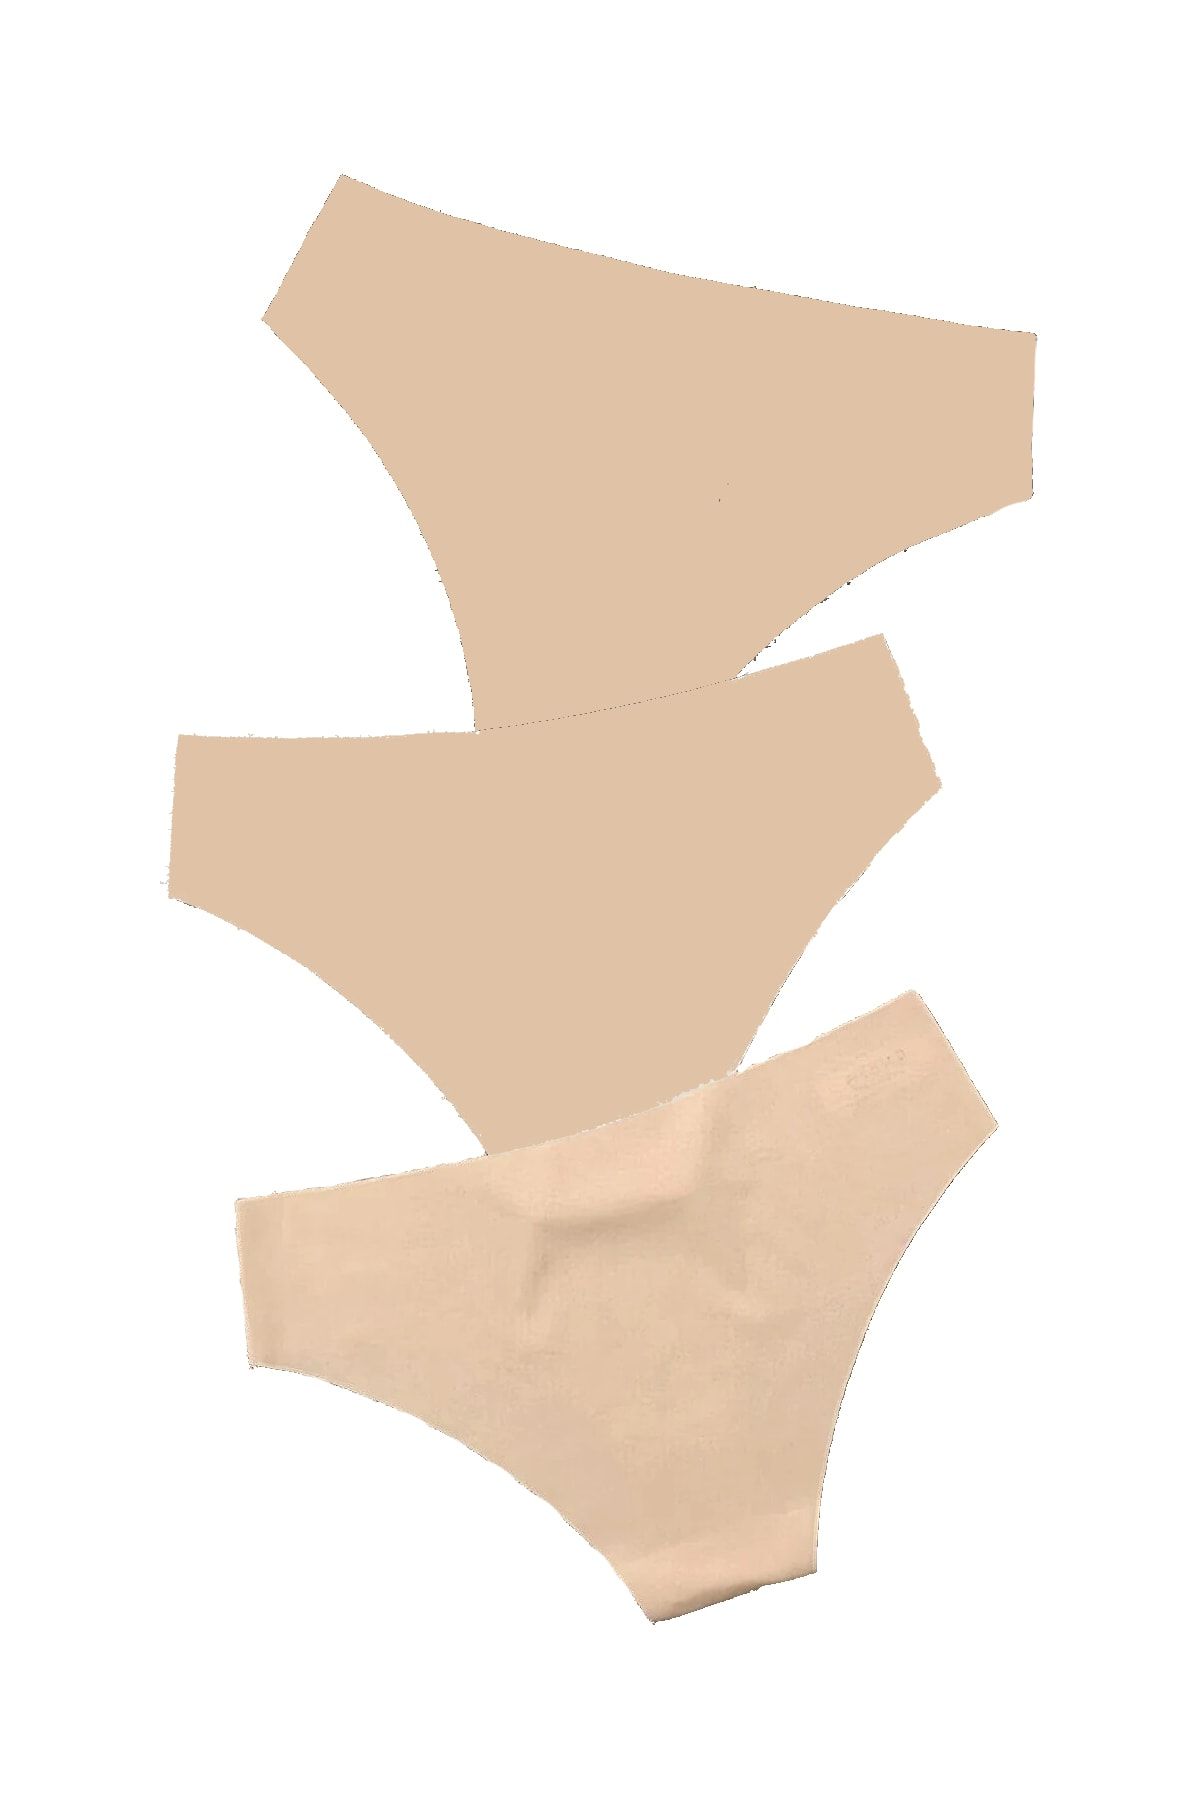 BENİMOLMALI High Waist Seamless Laser Cut Panties New Generation Panties 3  Pack - Trendyol